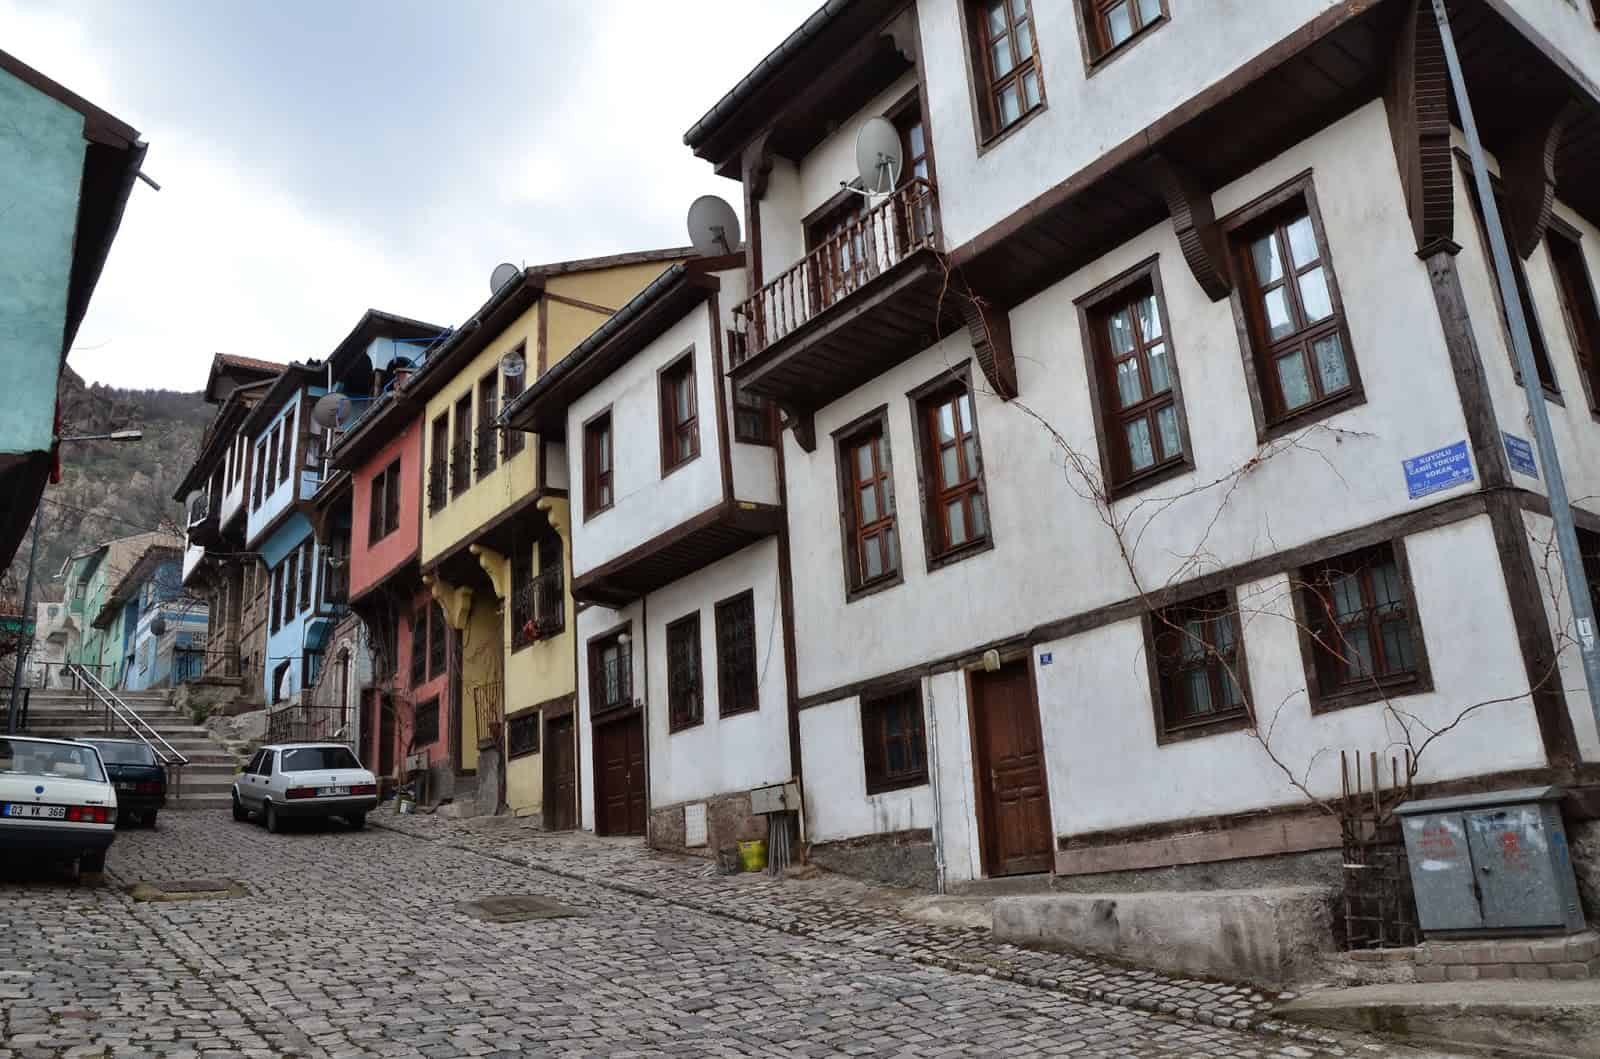 Ottoman homes in Afyon, Turkey